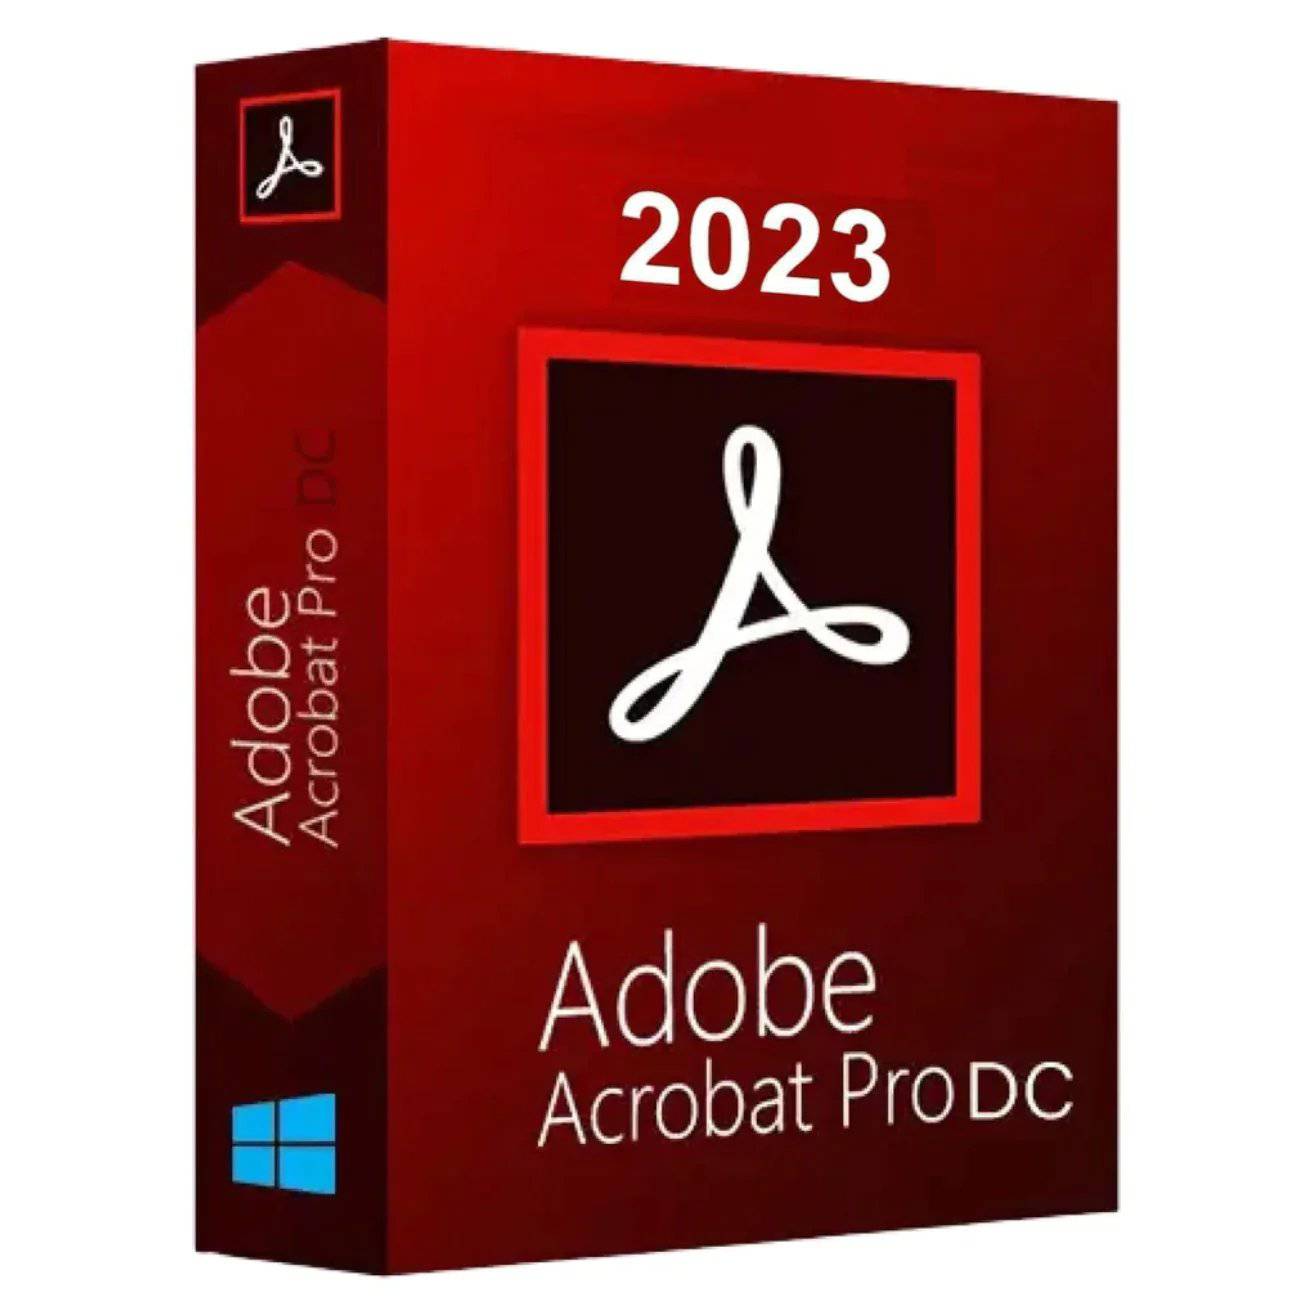 Adobe Acrobat Pro DC 2023 | Full Version | Lifetime License for 1 PC | Australian Stock - INFINITE-ITECH